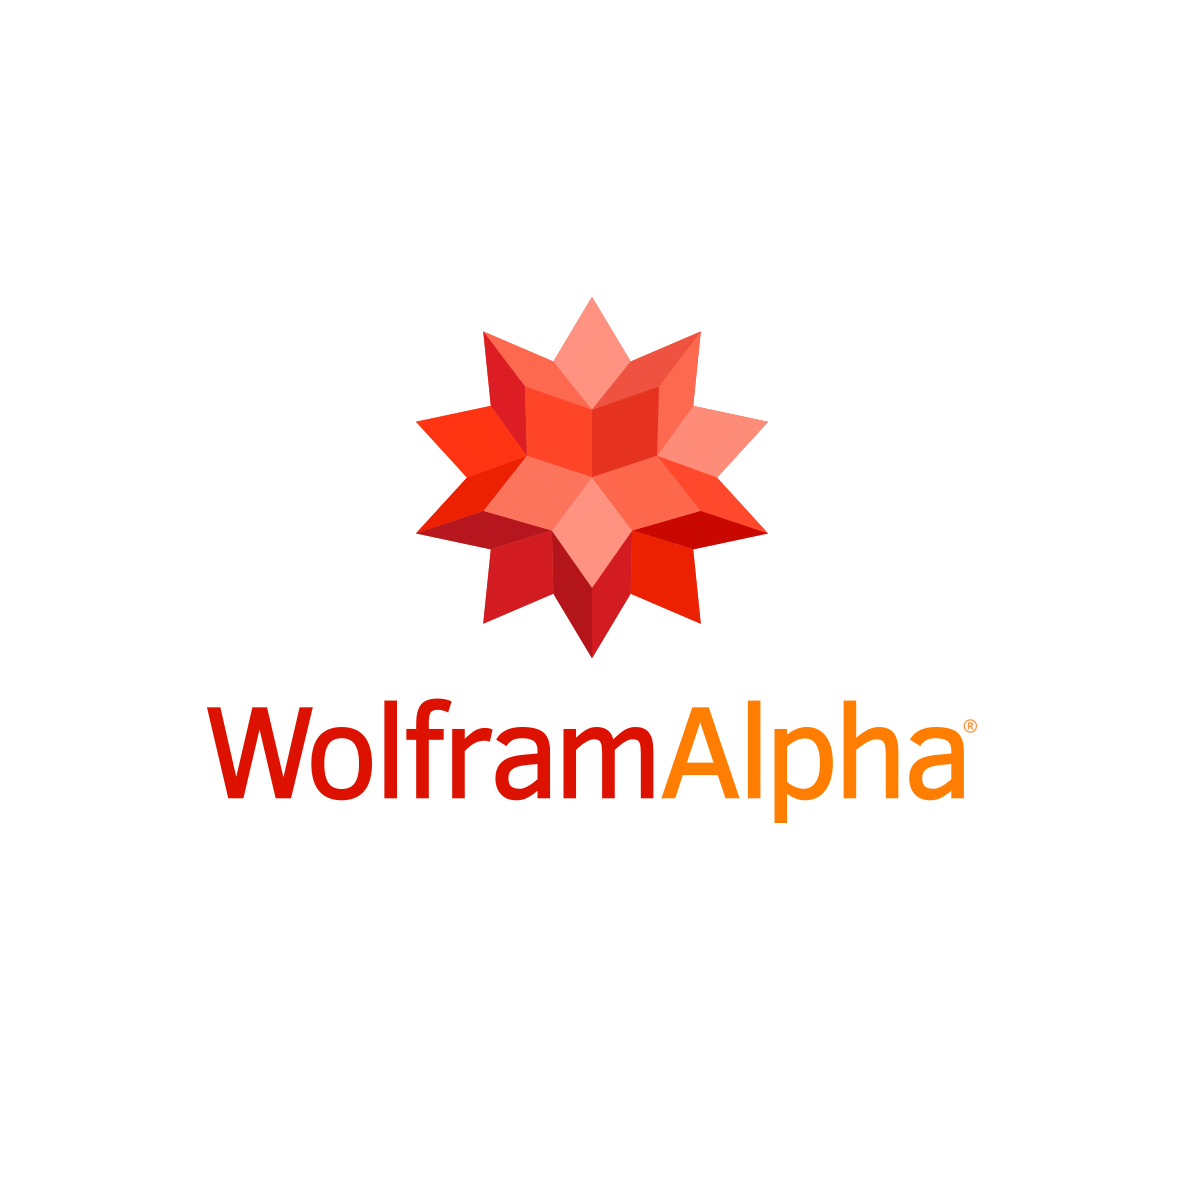 population of the world minus 2^32 - Wolfram|Alpha